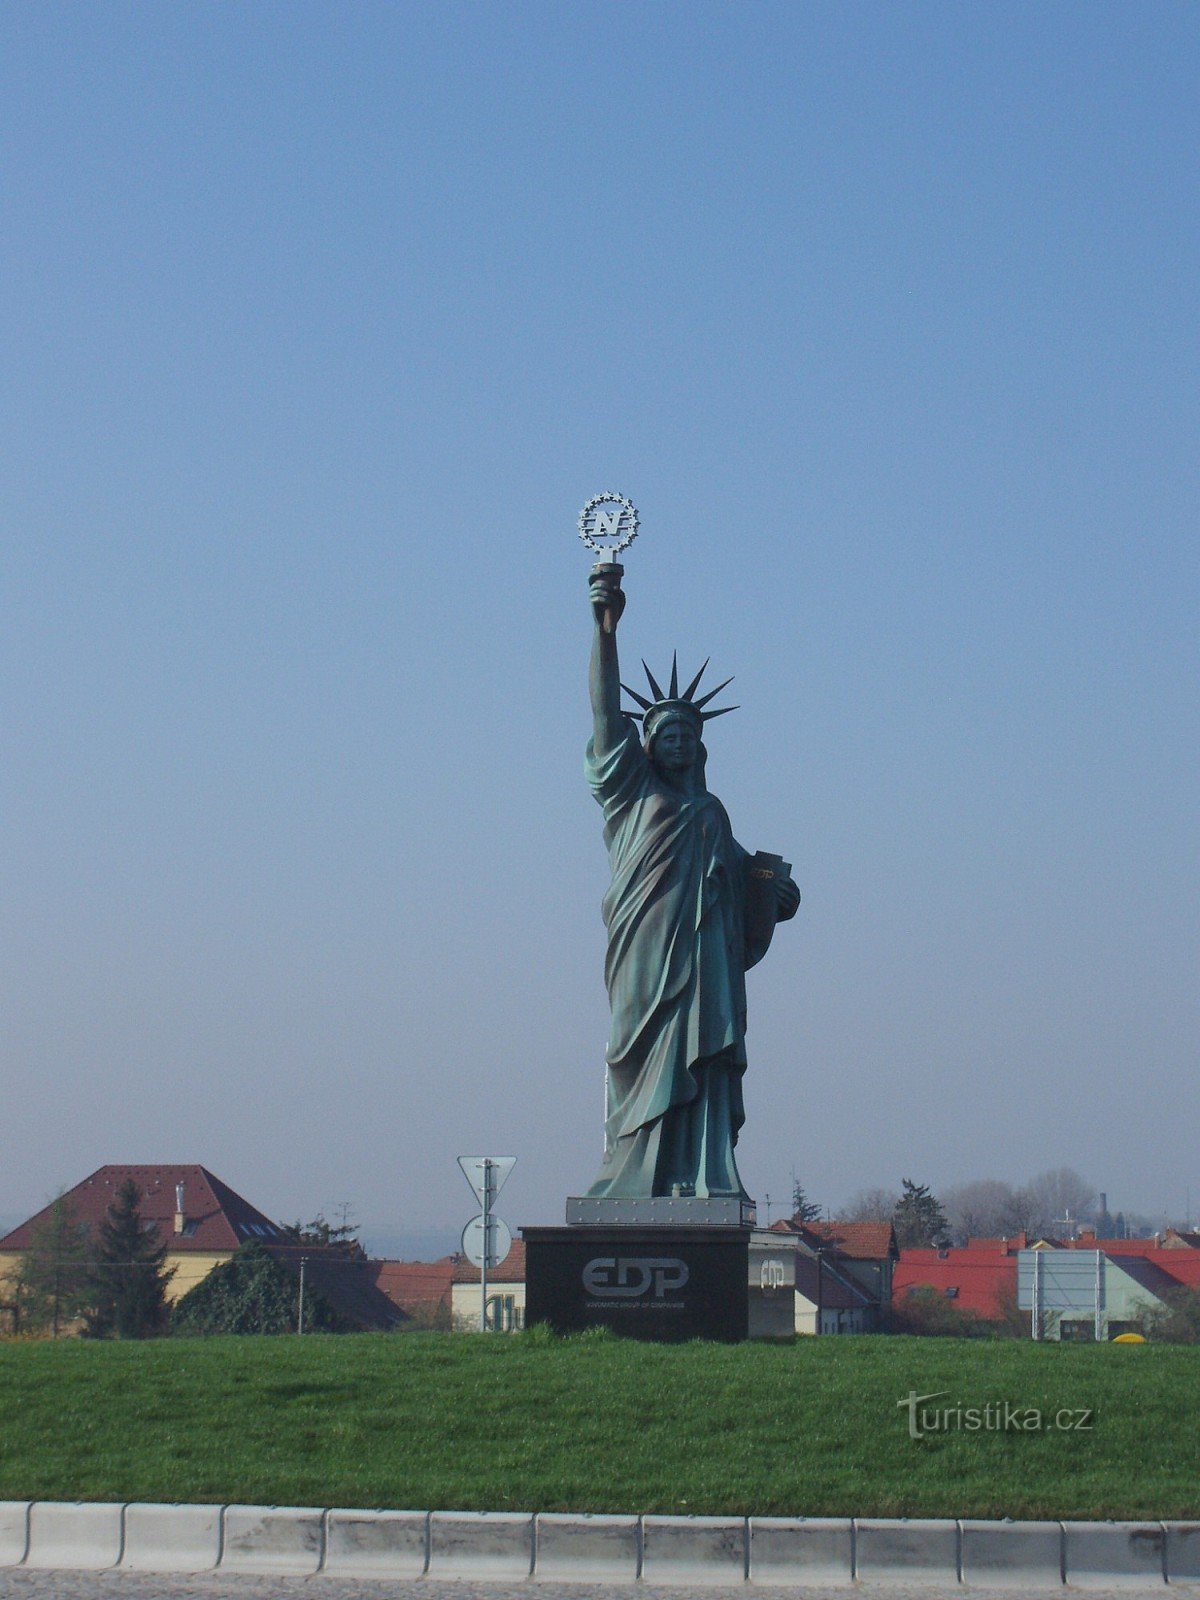 Chamberlains near Vyškov - replica of the Statue of Liberty